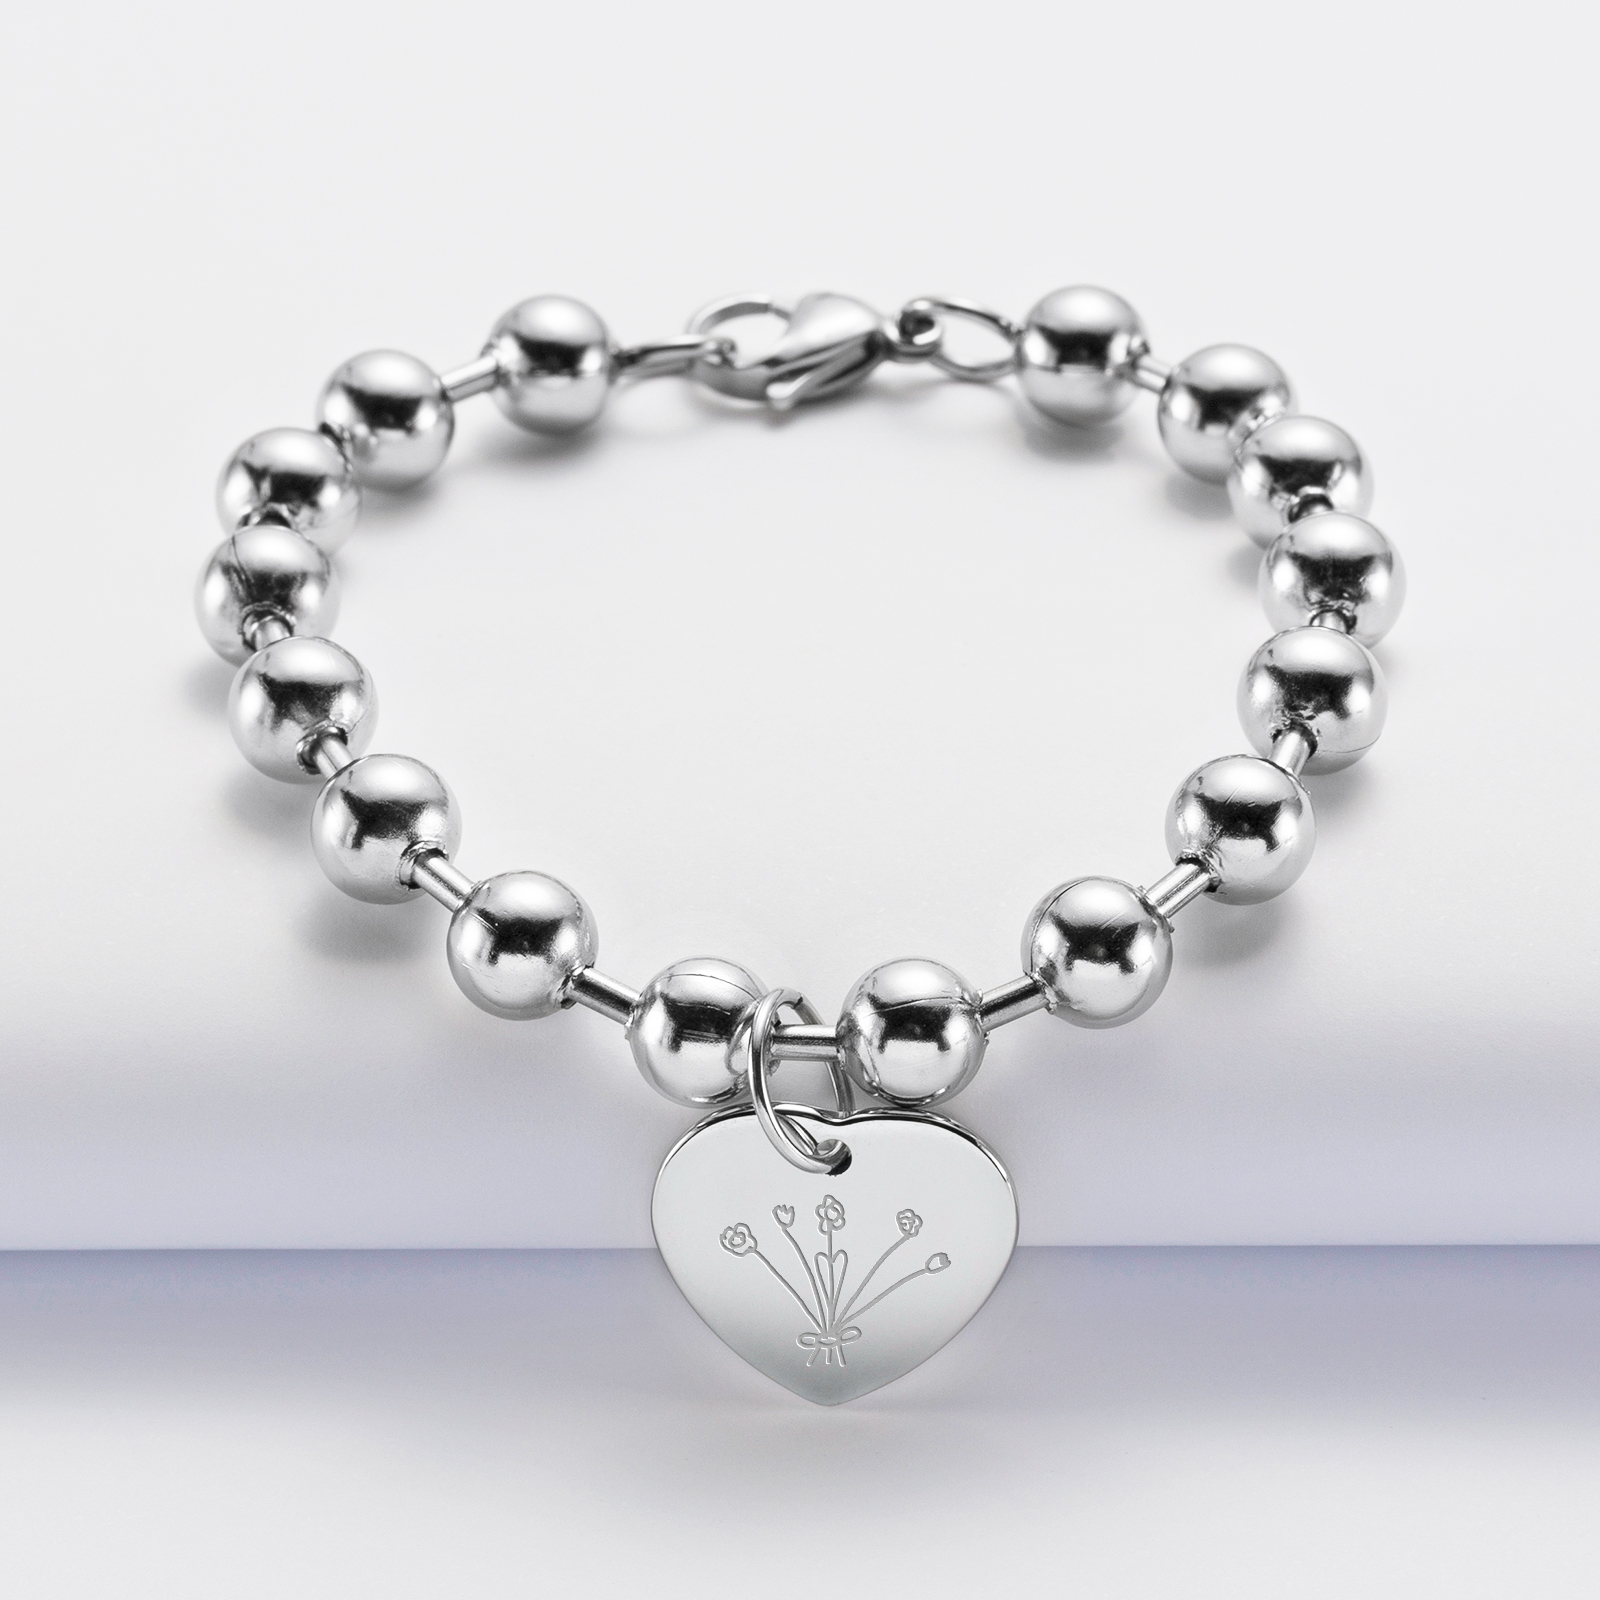 Personalised steel bead bracelet with engraved heart medallion 20x18mm - sketch